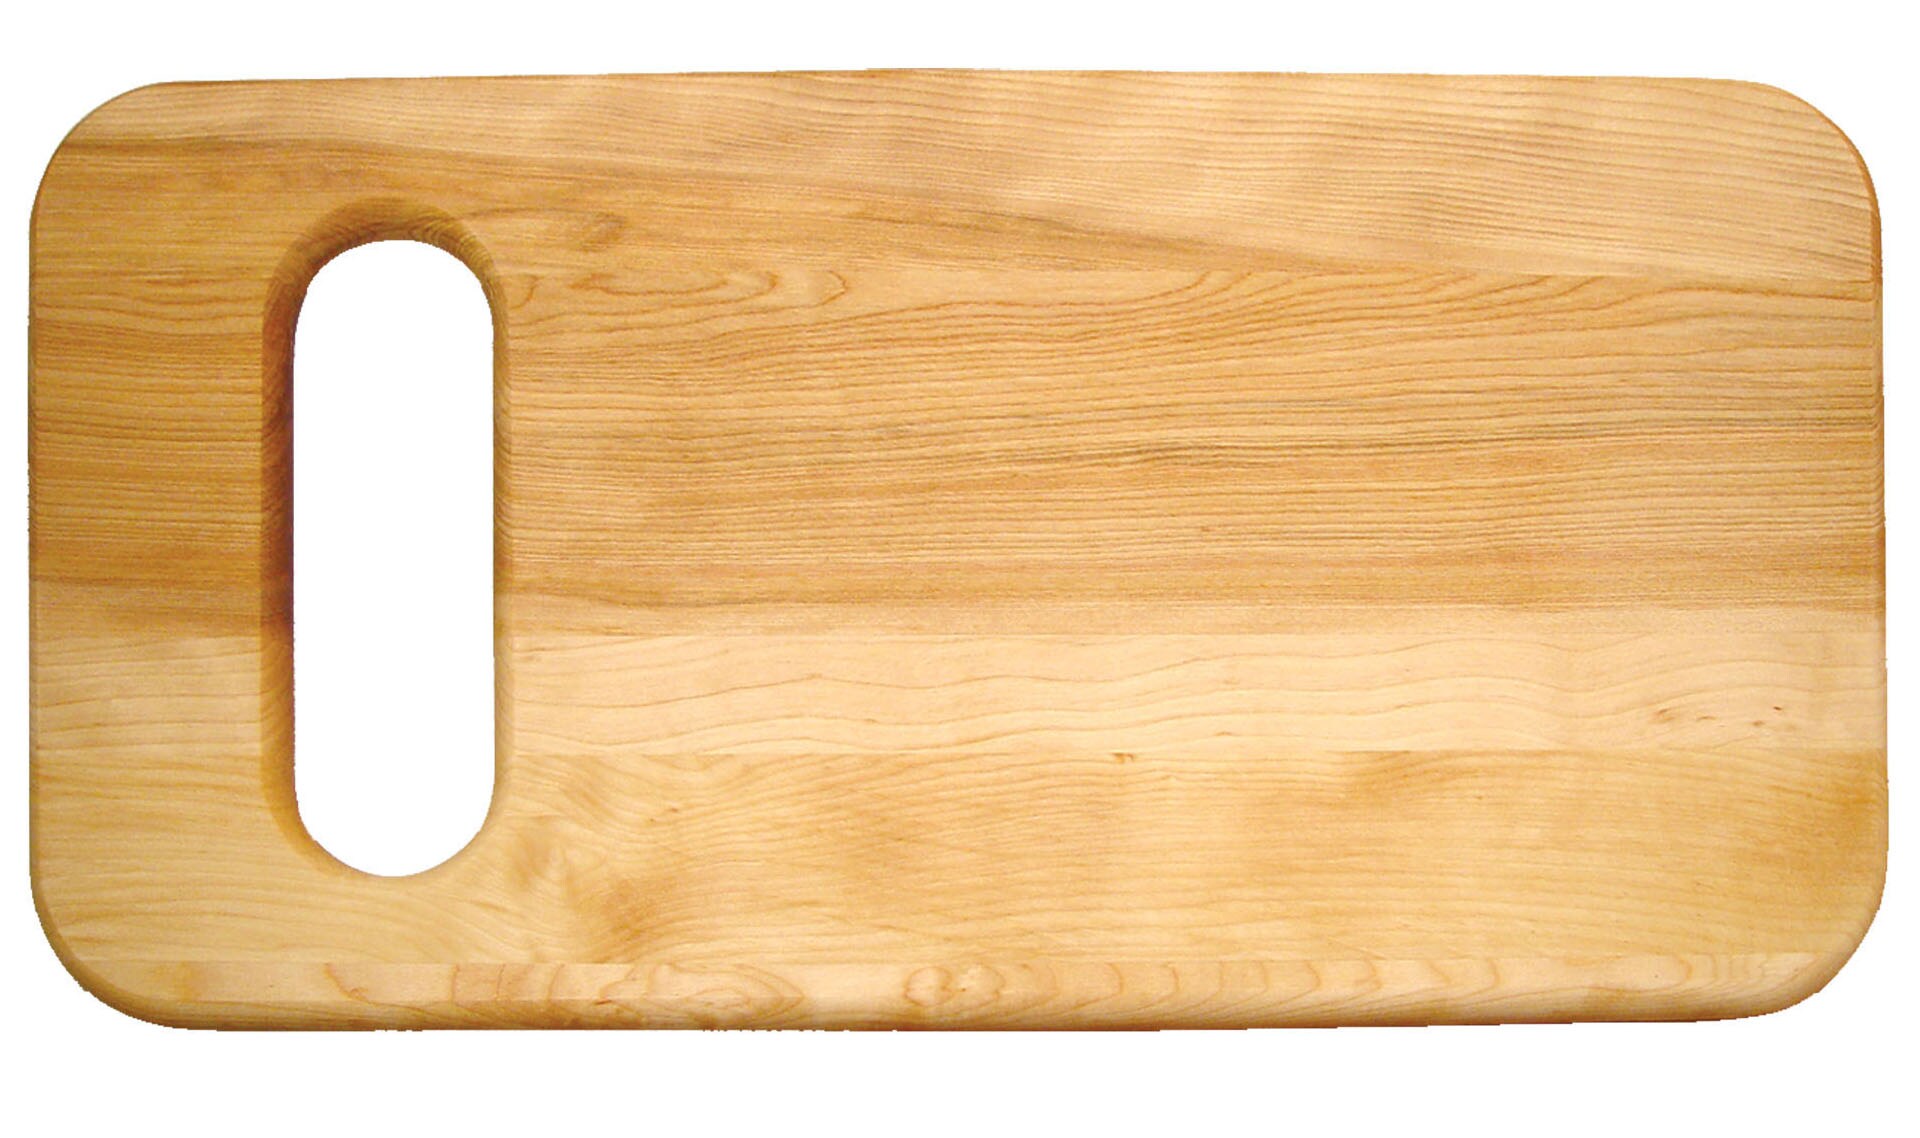 ZWILLING Cutting Boards 14-inch x 10-inch Cutting Board, bamboo